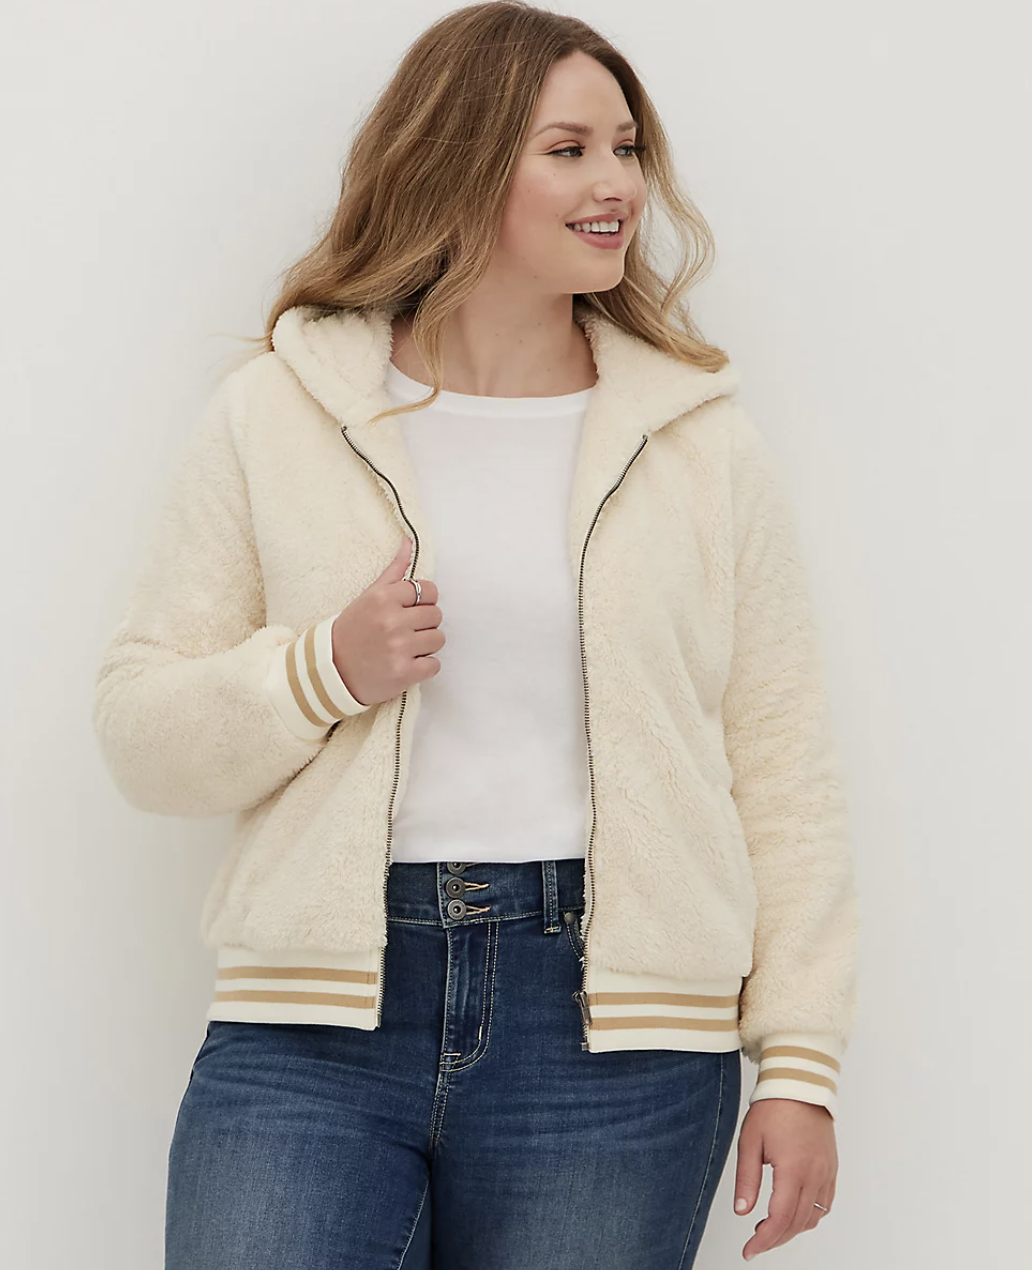 Model in ivory zippered sherpa jacket